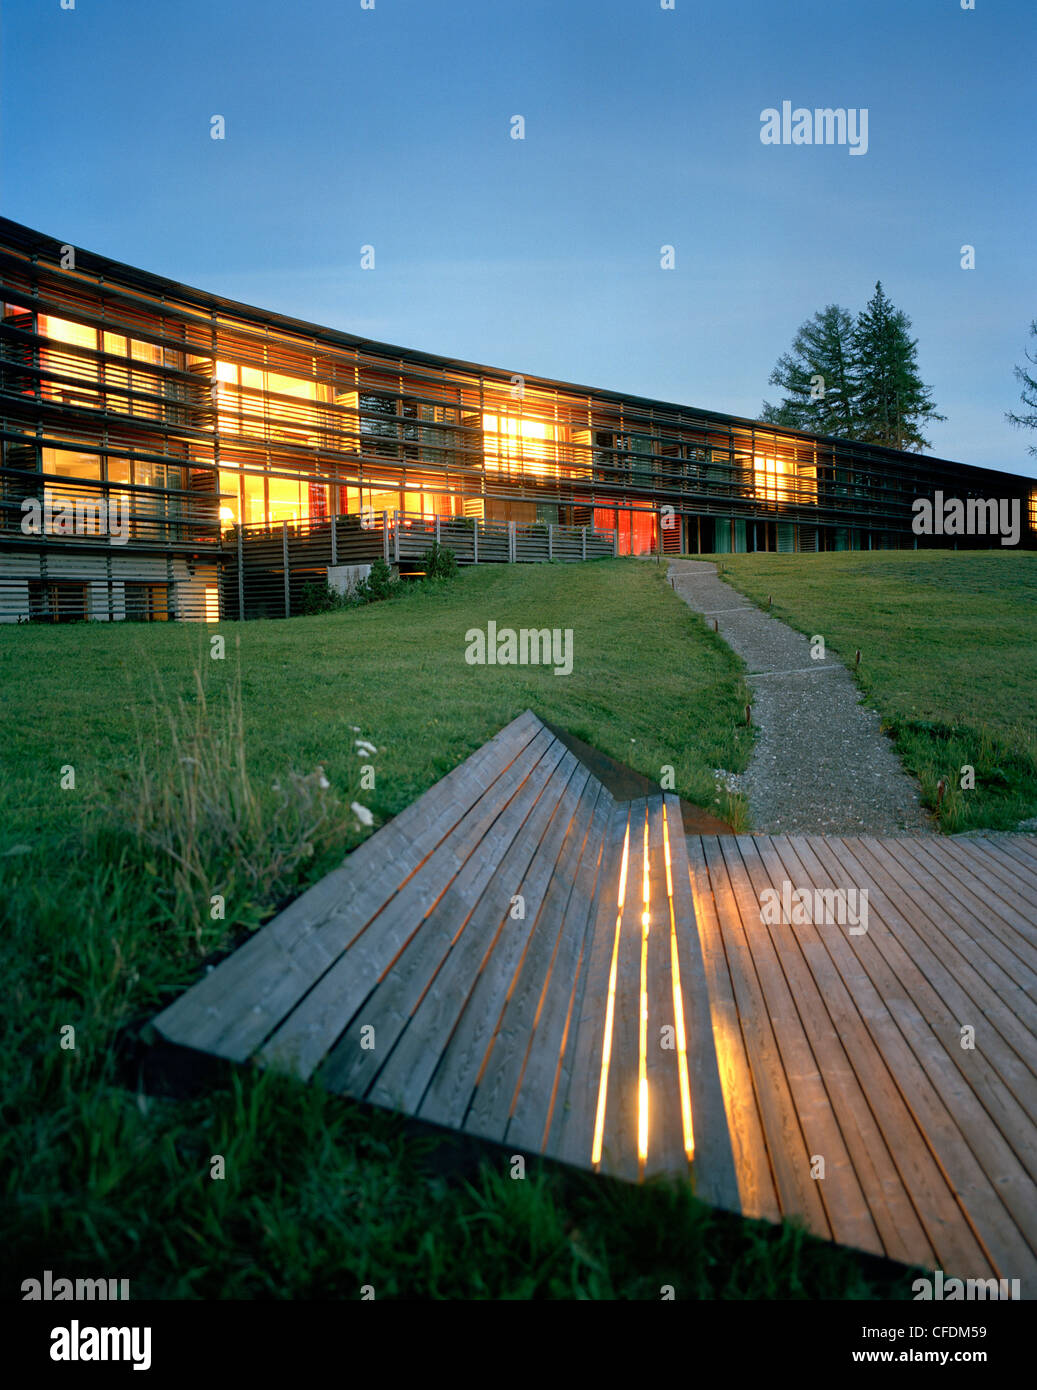 Vue extérieure d'un hôtel dans la soirée, Vigilius Mountain Resort, Vigiljoch, Lana, Trentino-Alto Adige/Suedtirol, Italie Banque D'Images